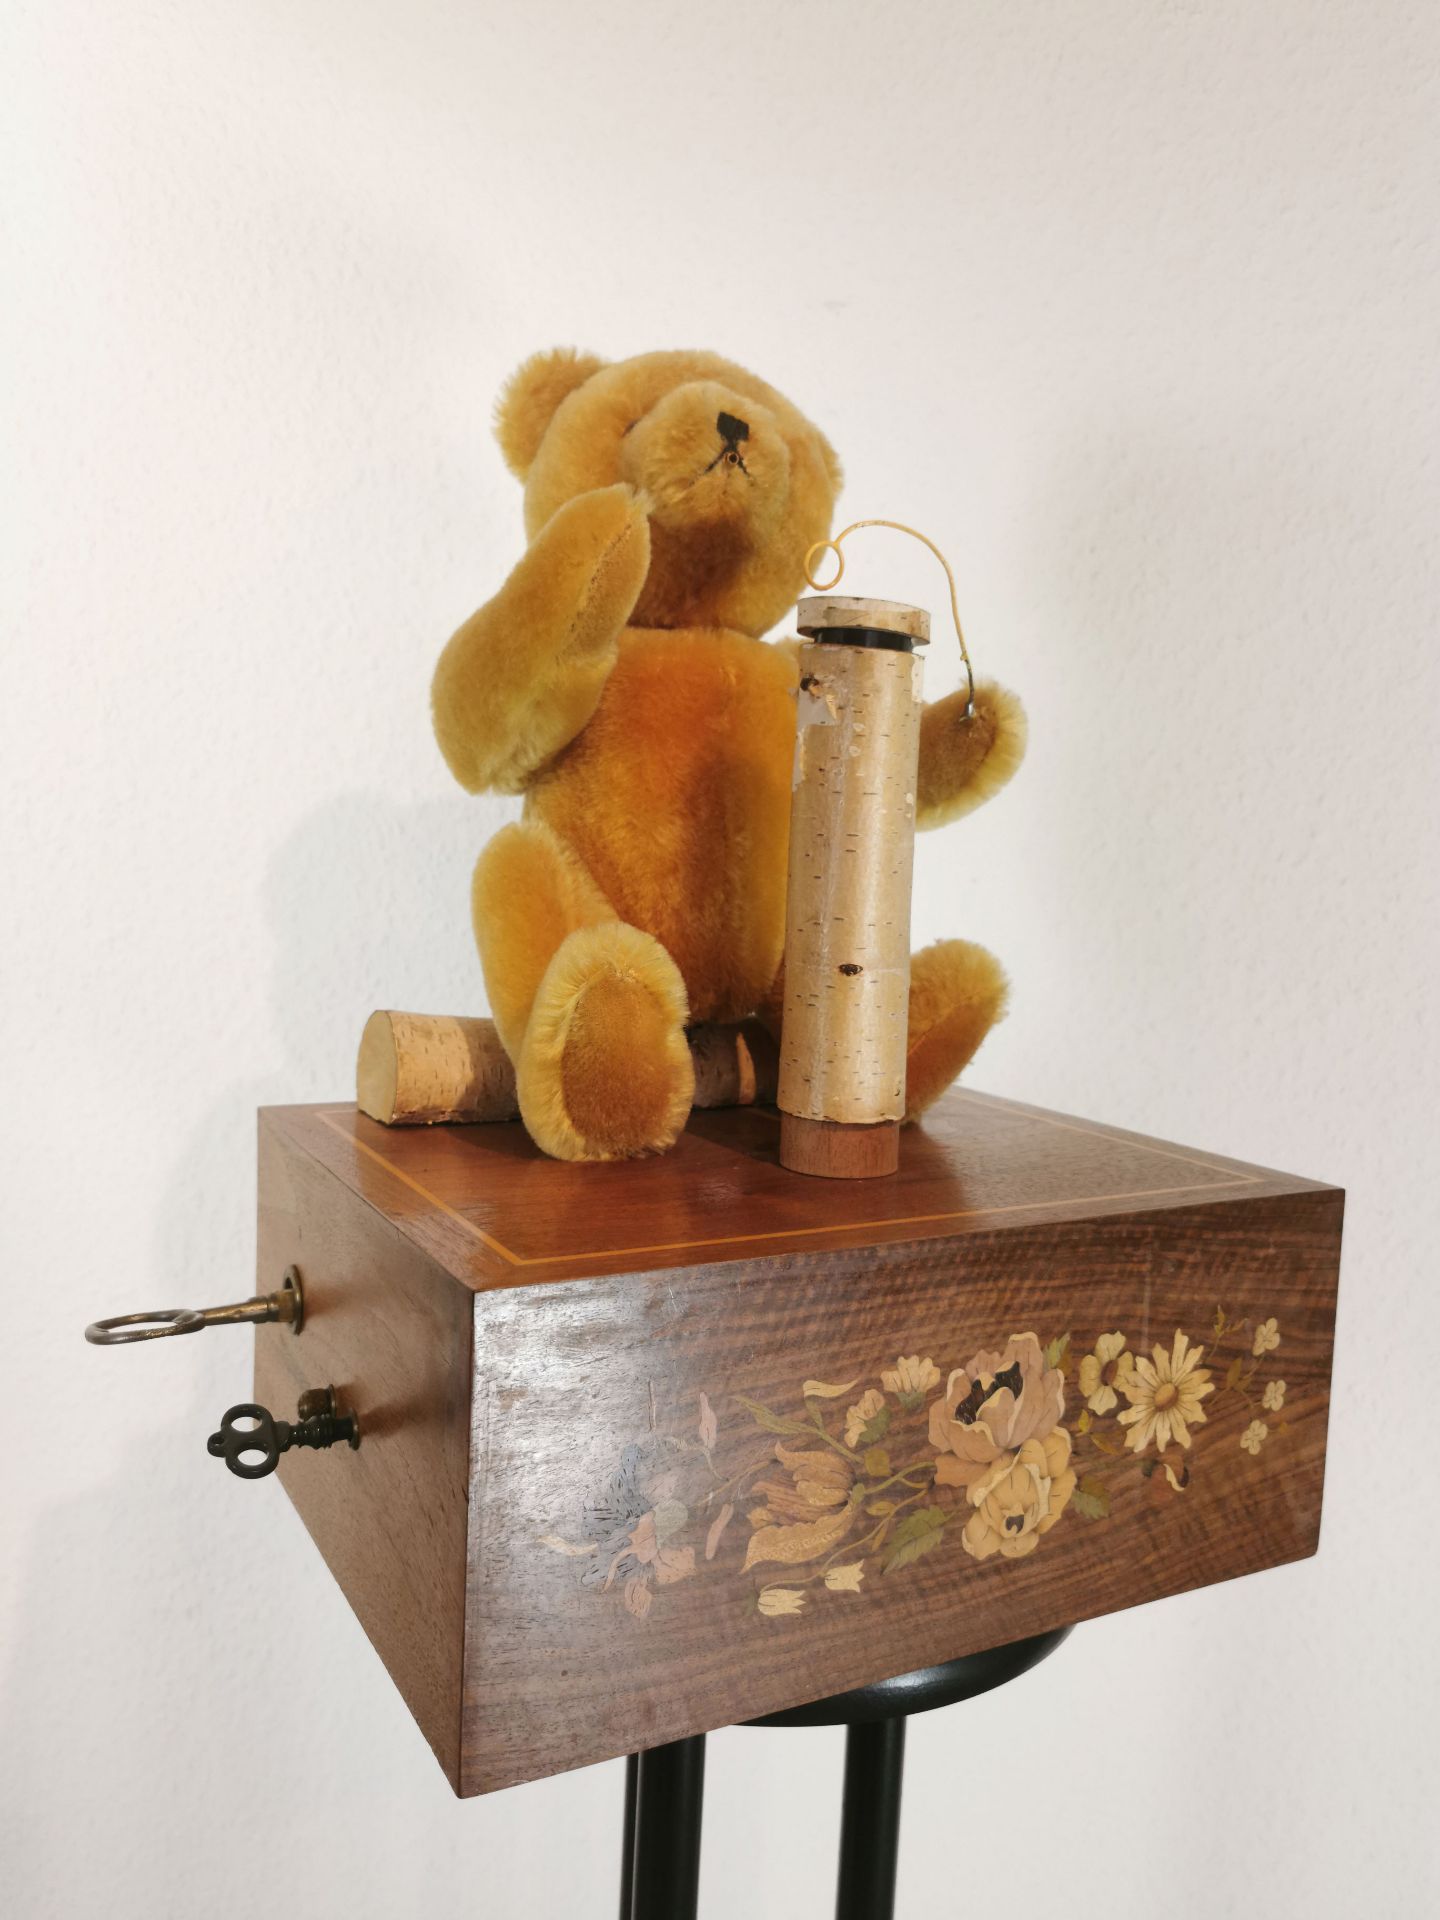 Bubble Blowing Teddy Bear Automaton Made by Werner Tschudin  - Bild 3 aus 6